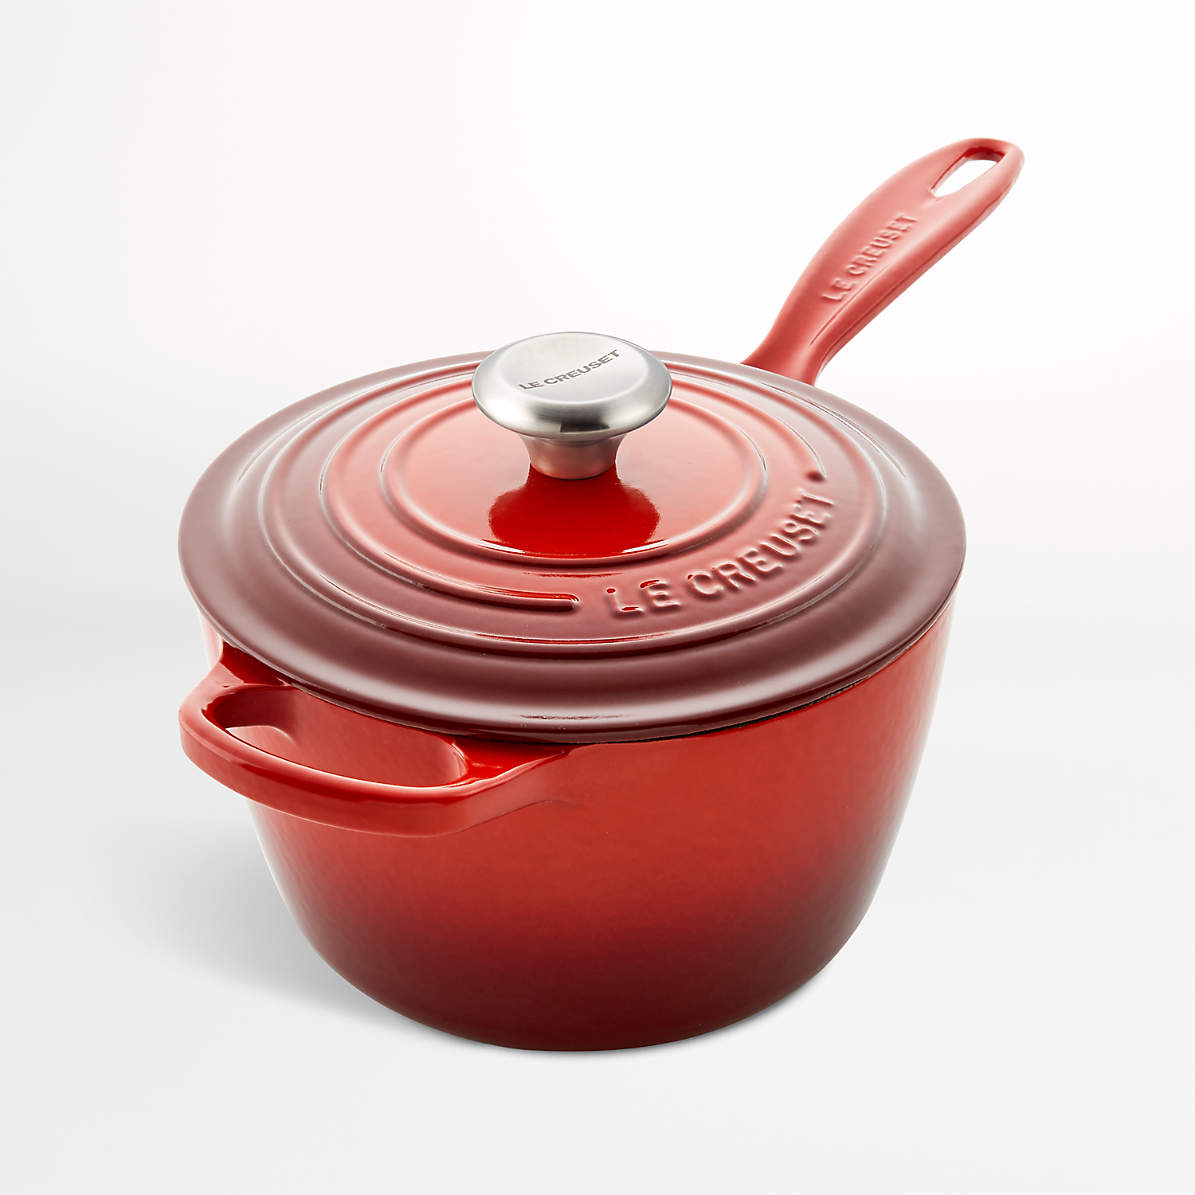 Le Creuset cast iron sauce pan / skillet 23 cm, round, red